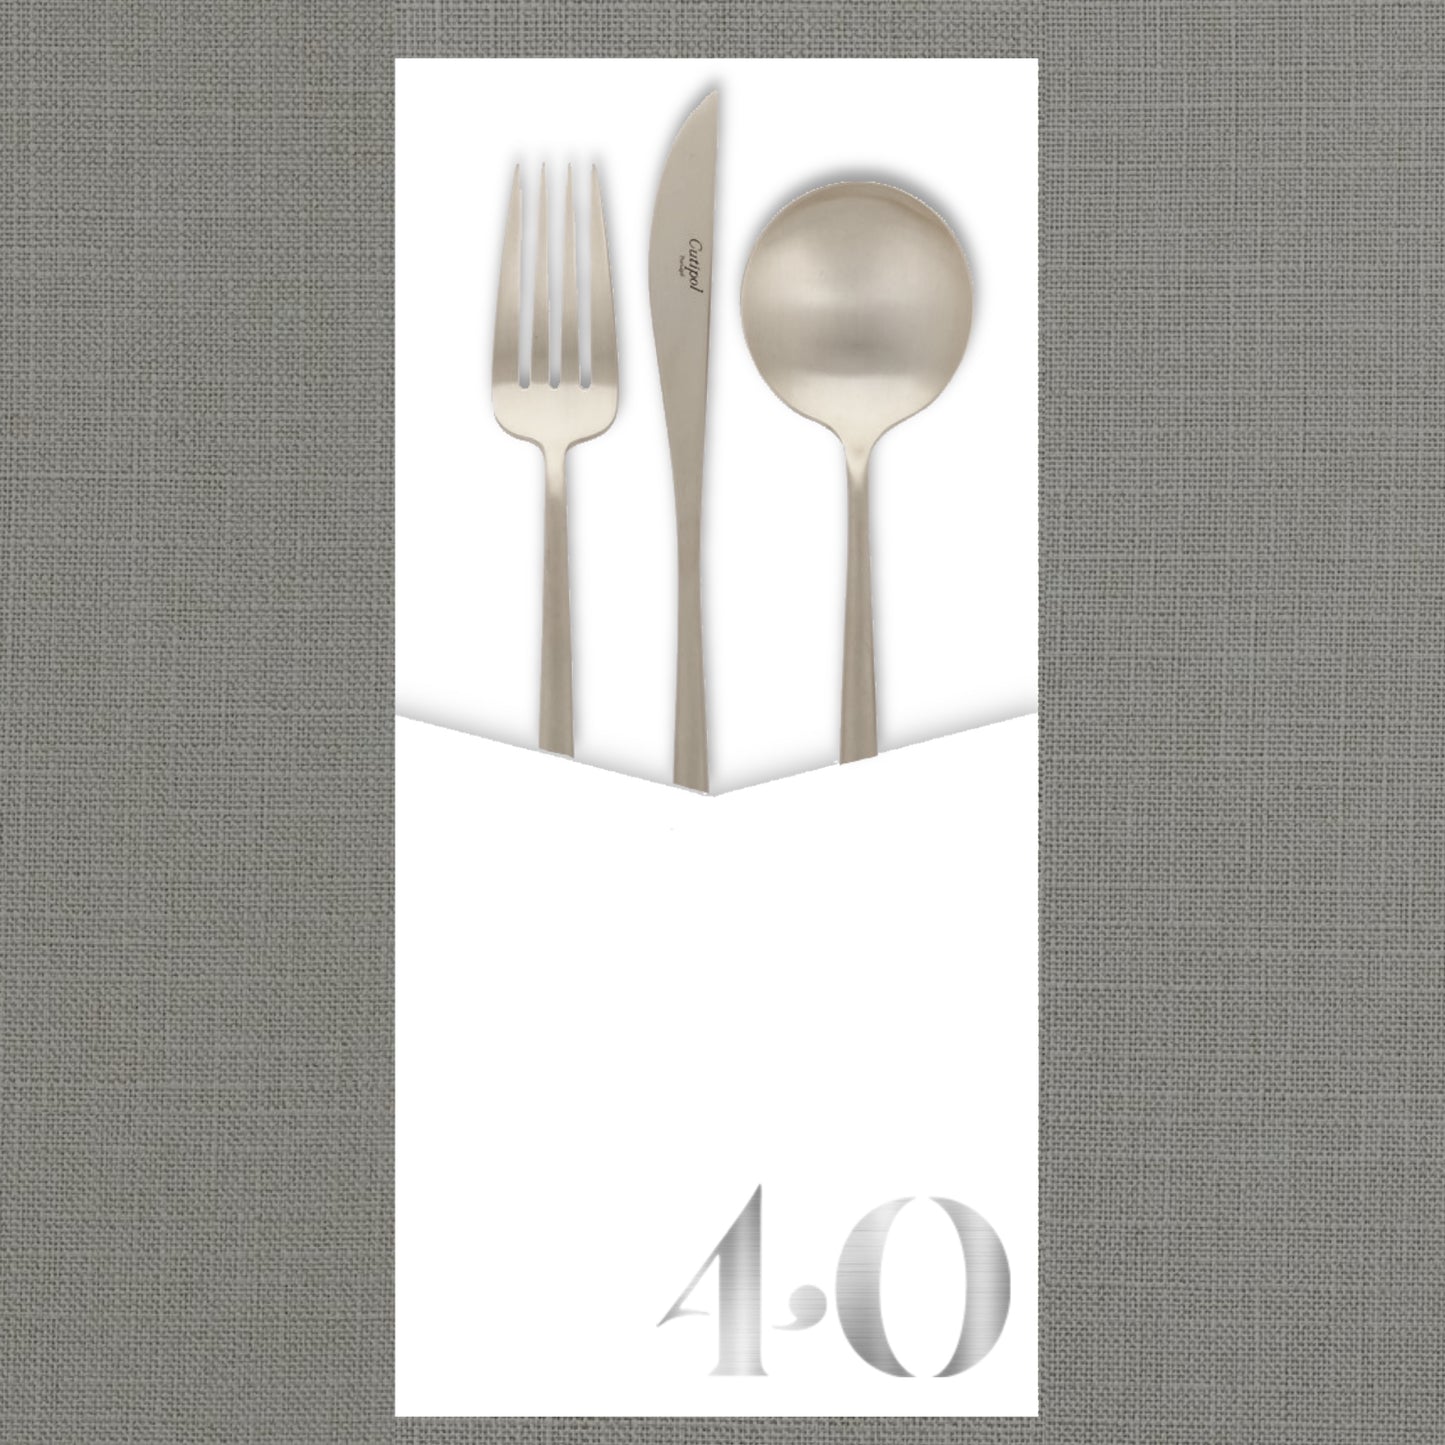 Foil Celebrate! 40 - Cutlery Pouch